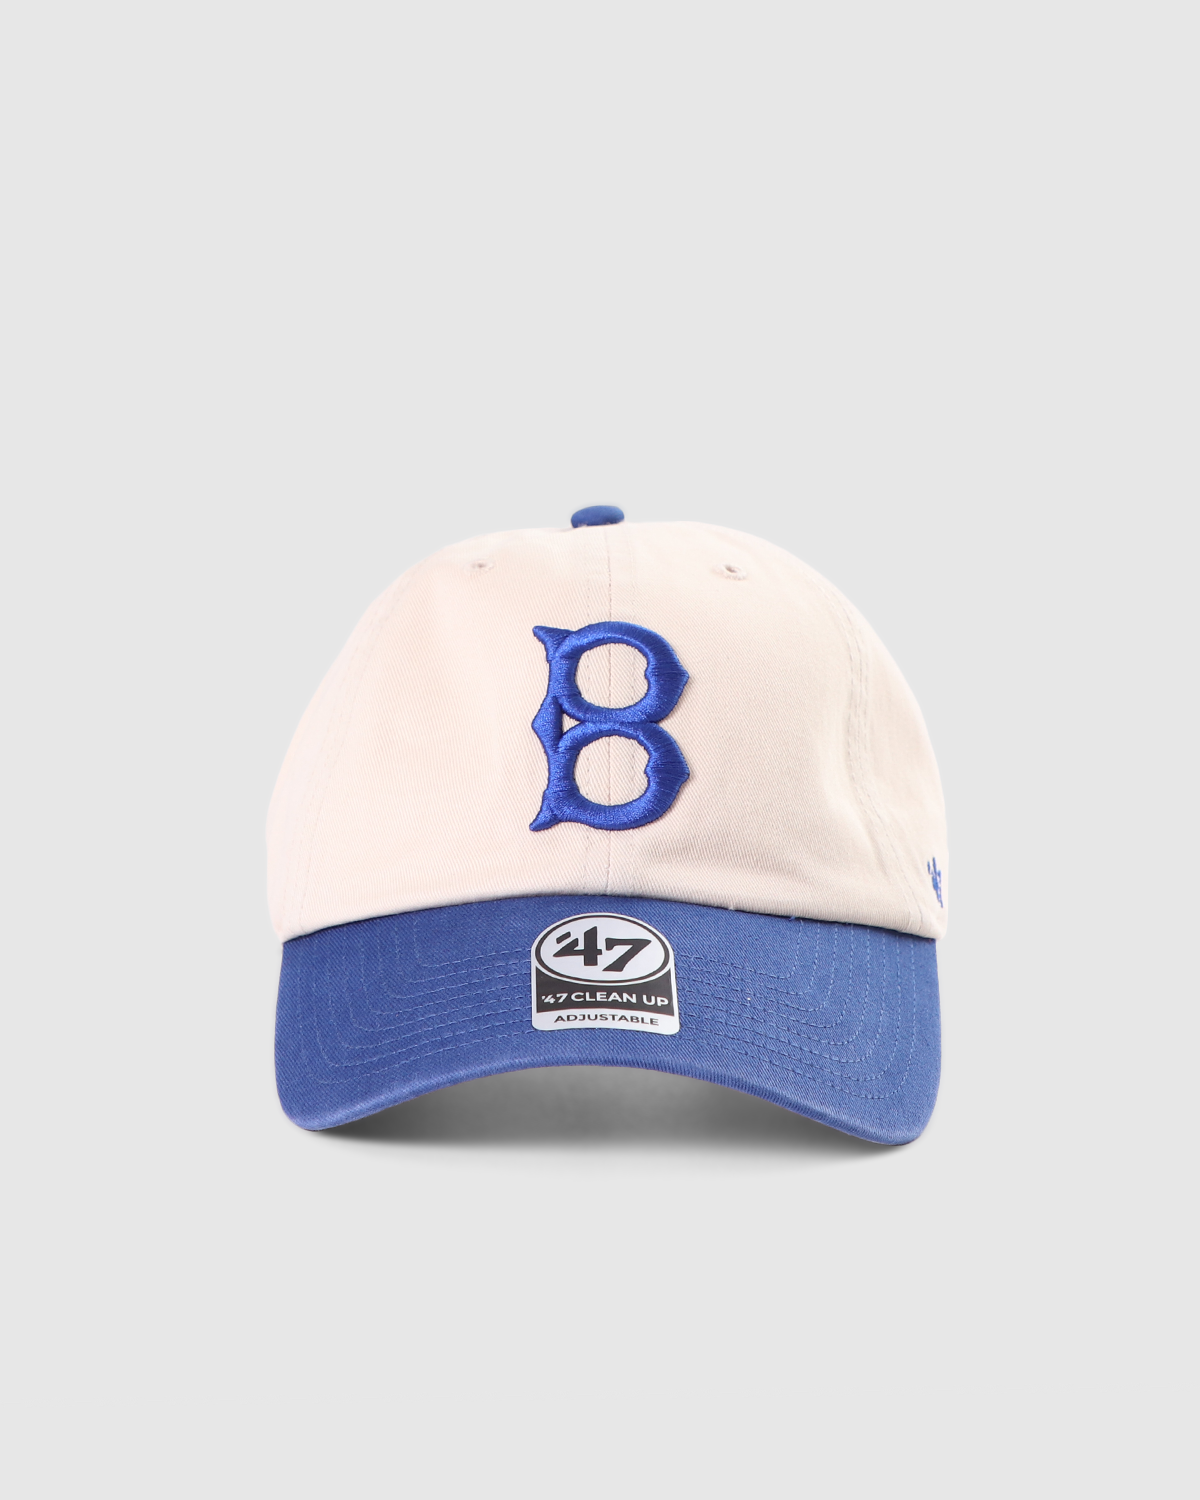 Los Angeles Dodgers 47 Brand Cardinal MVP Adjustable Hat